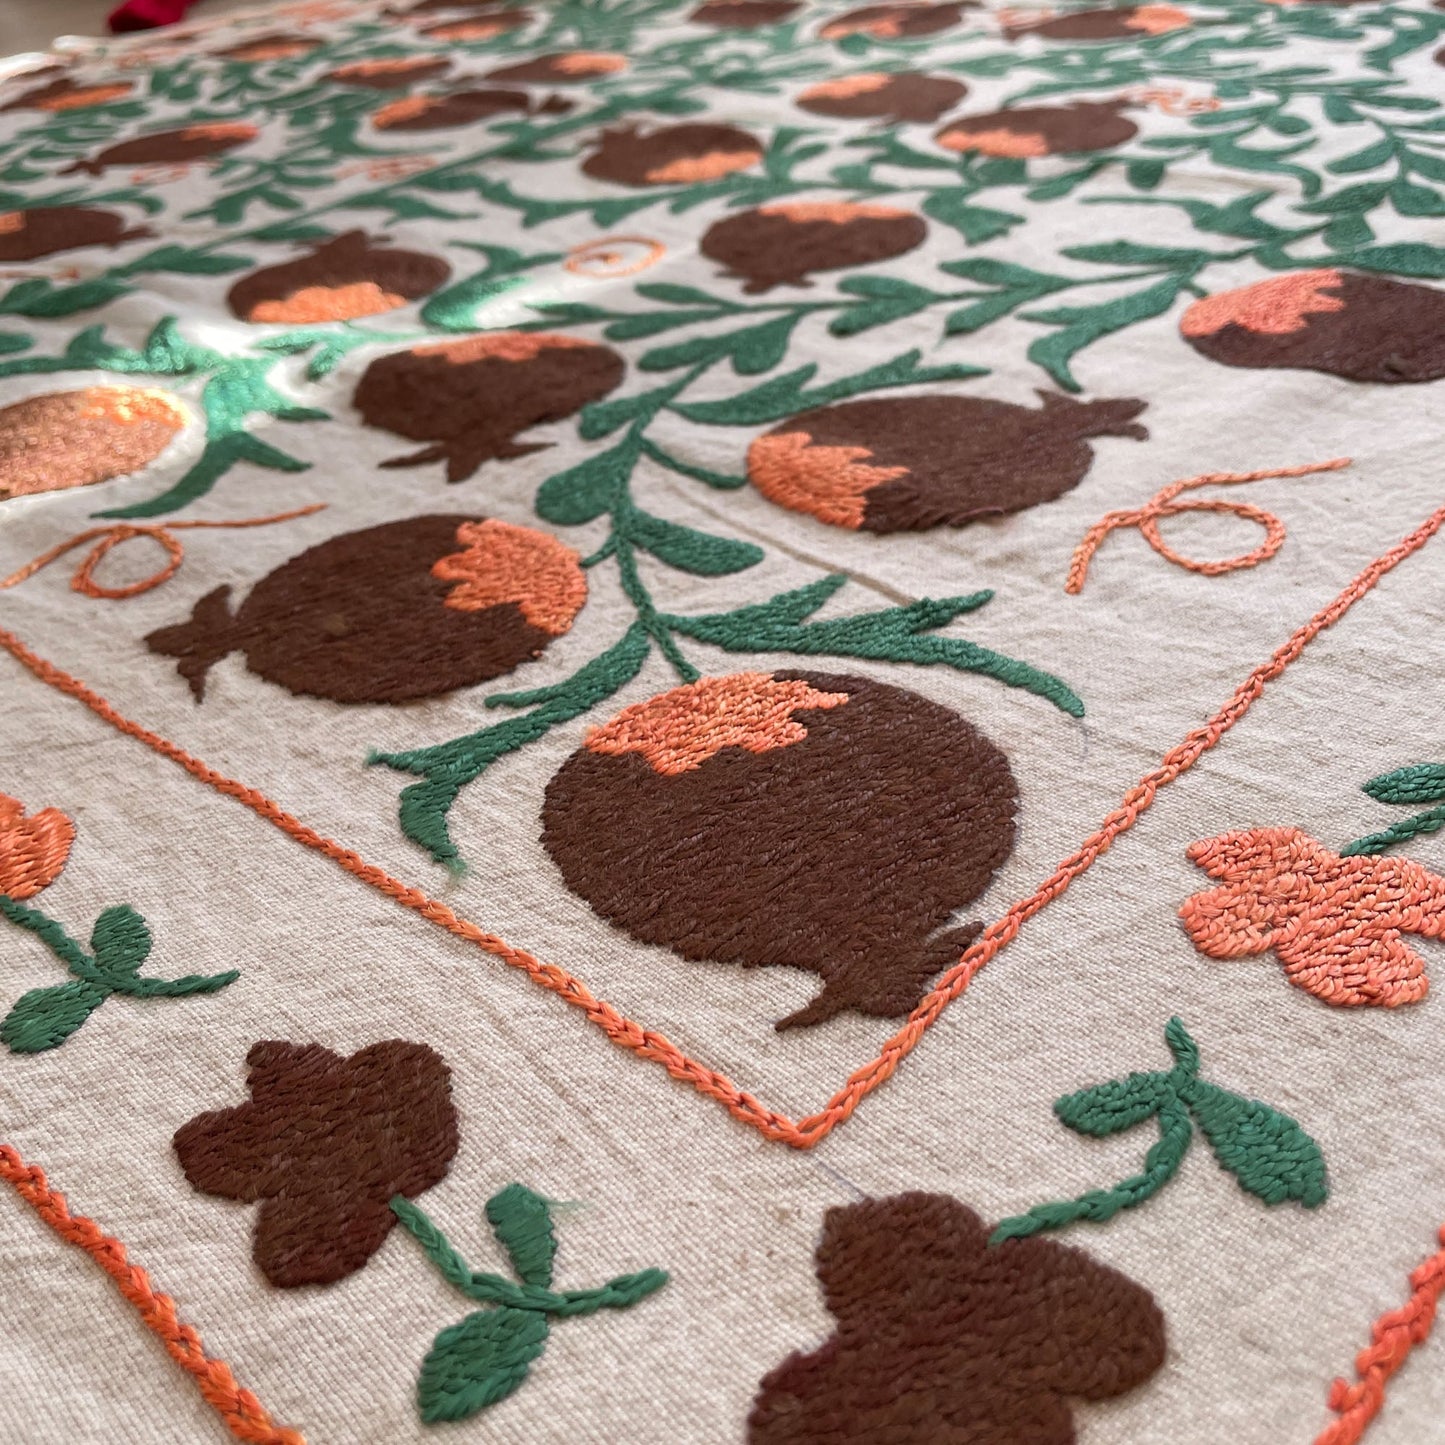 Uzbeki Suzani Hand Embroidered Textile Wall Hanging | Home Décor | Square | 100cm x 100cm SUZ0410002 - Wildash London